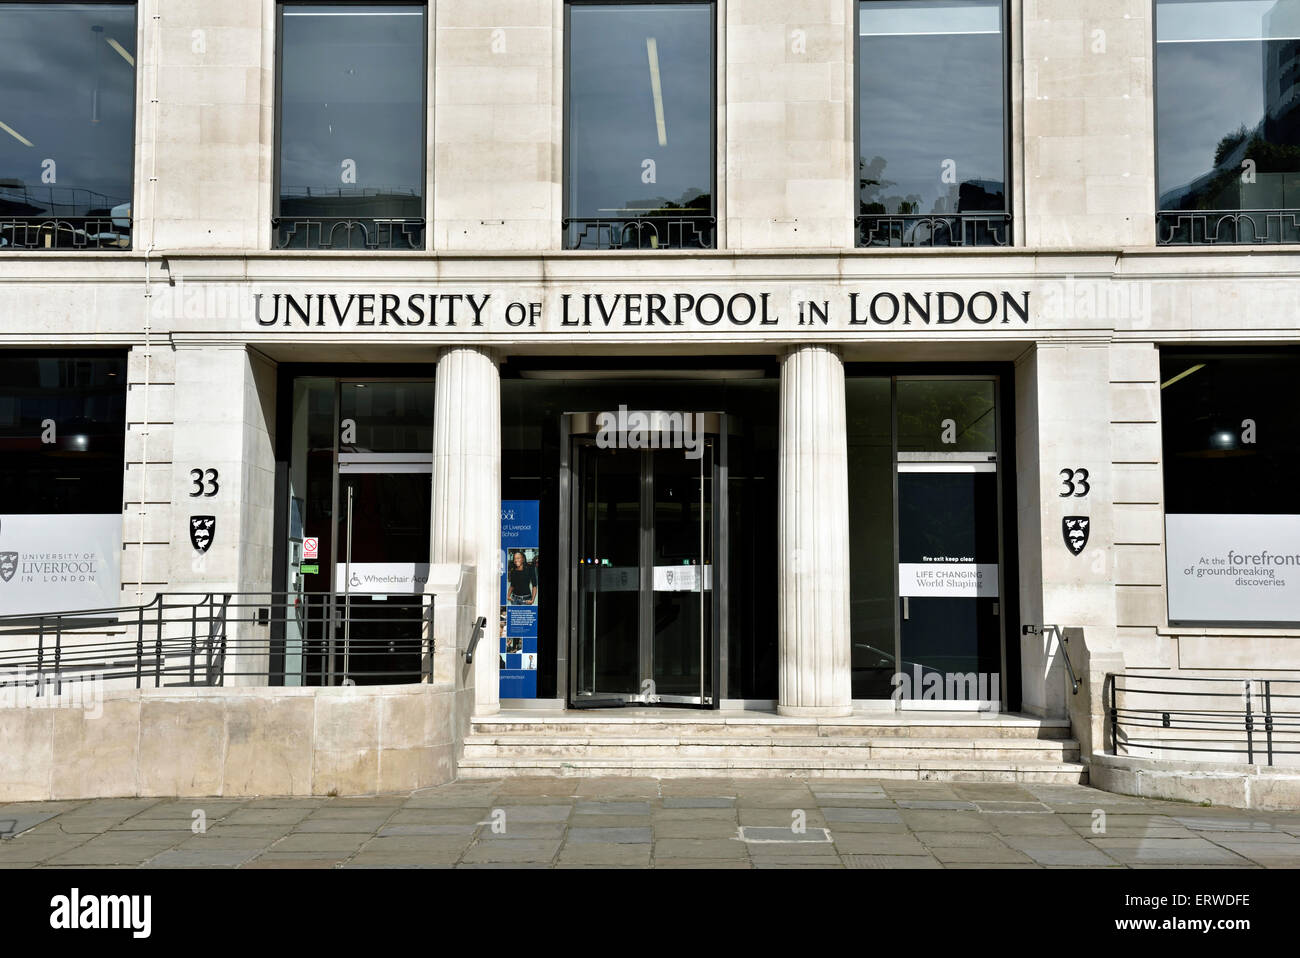 Universität von Liverpool in London, Finsbury Square, London Borough of Islington, England Großbritannien UK Stockfoto